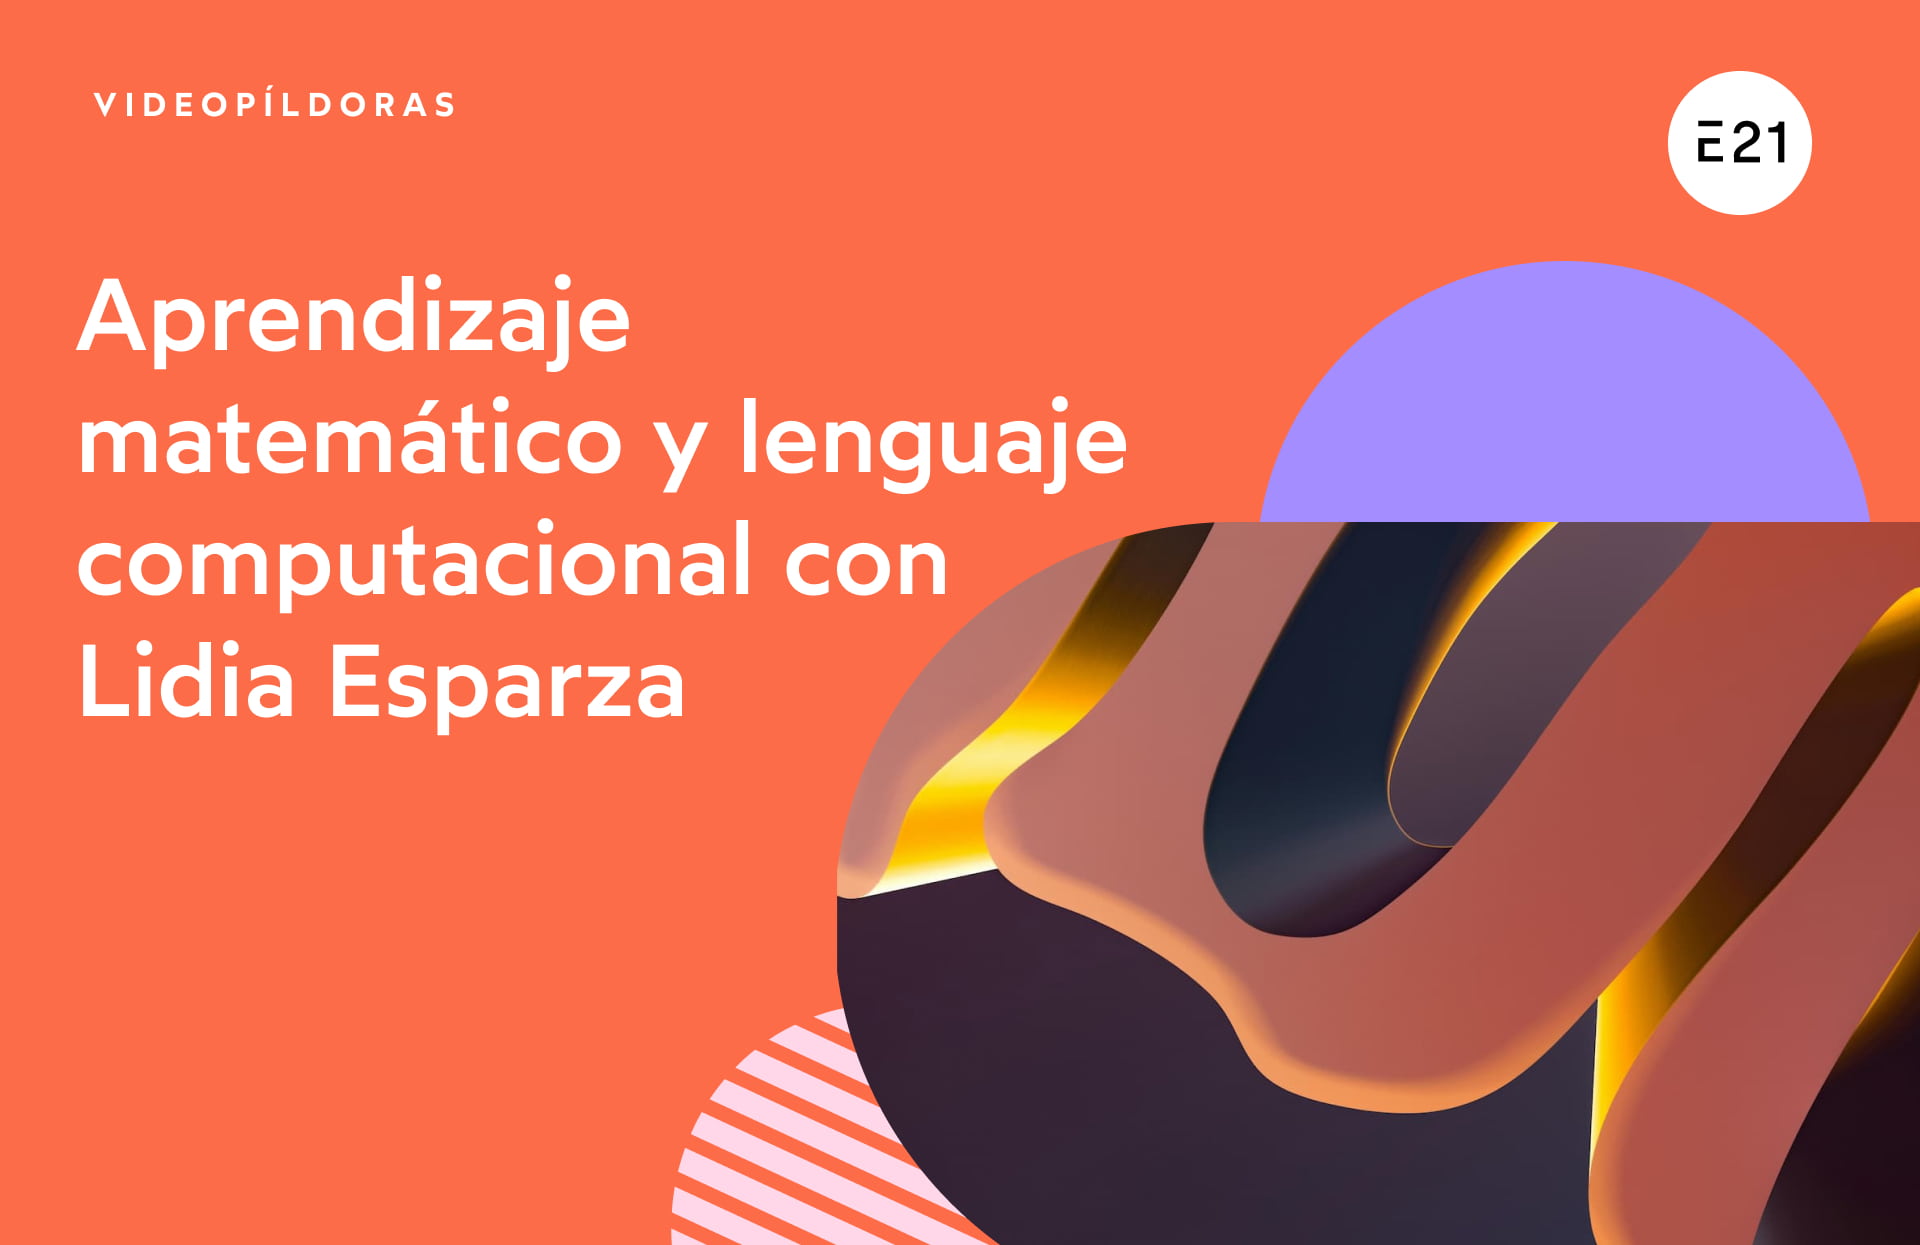 Aprendizaje matemático y lenguaje computacional con Lidia Esparza